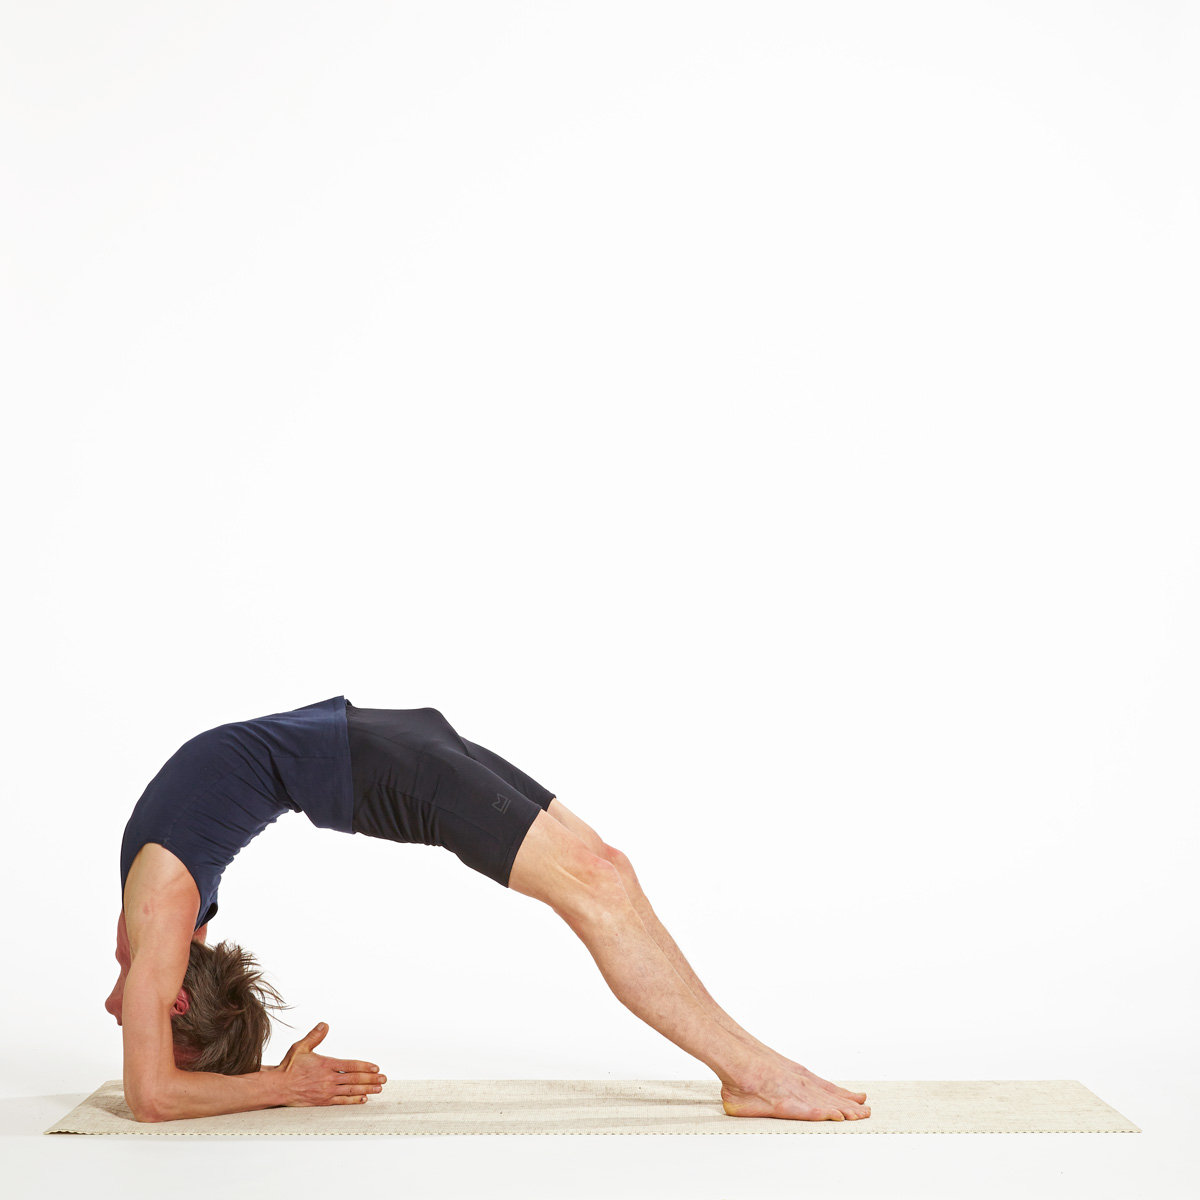 How To Do Forearm Wheel Pose | Yoga backbend, Wheel pose yoga, Flexible  yoga poses